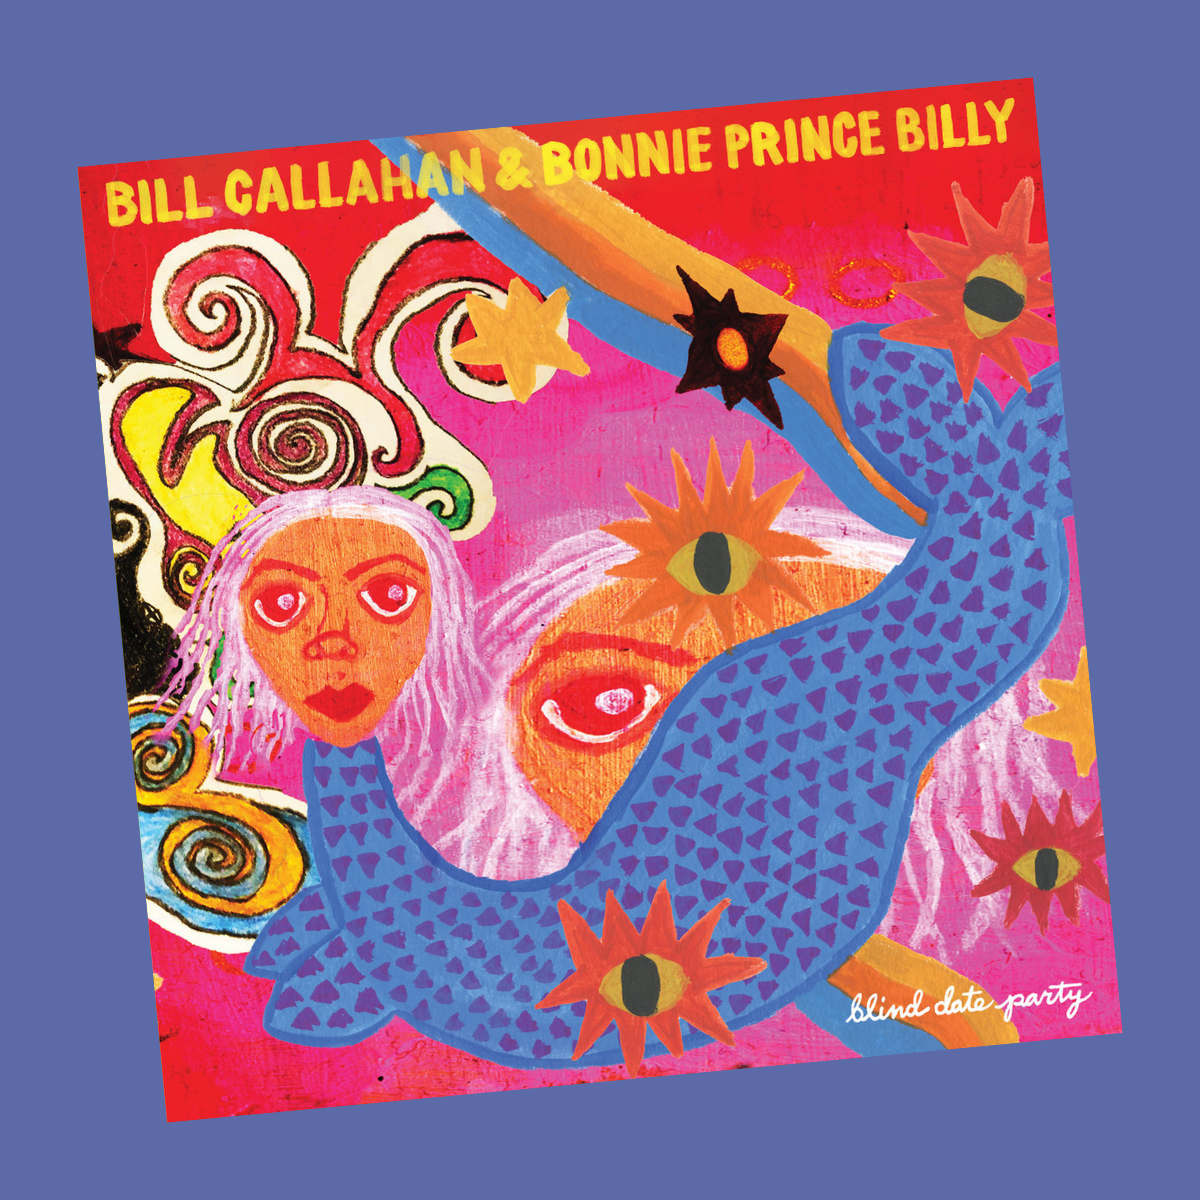 Bill Callahan & Bonnie 'Prince' Billy